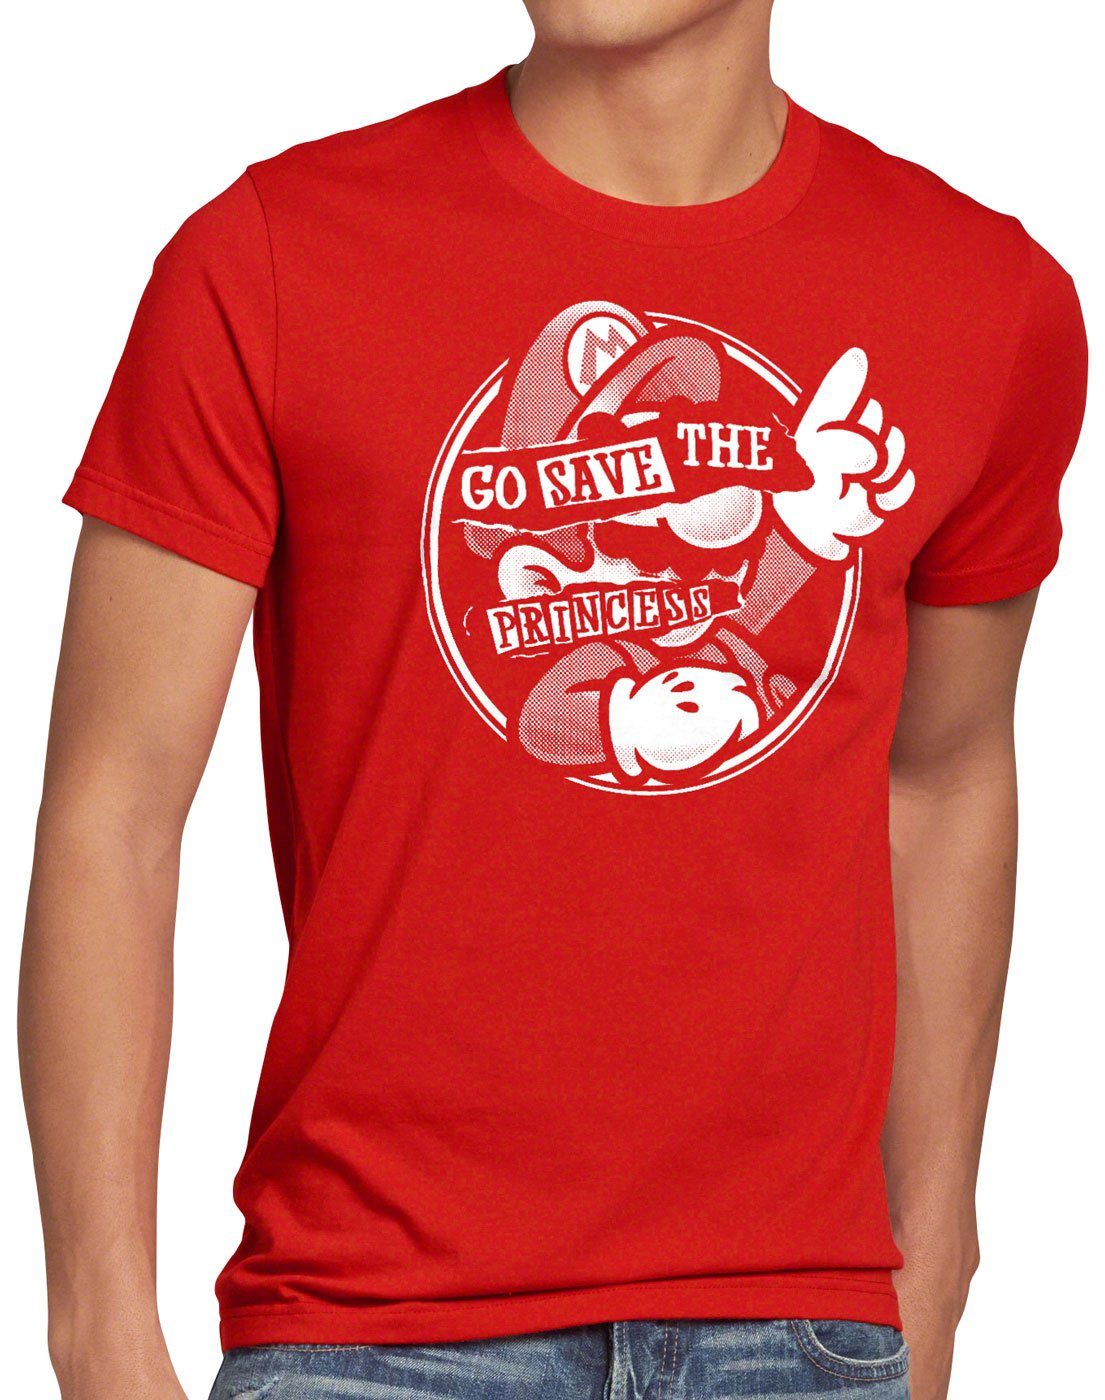 style3 Print-Shirt Herren T-Shirt Go Save the Princess mario switch rot